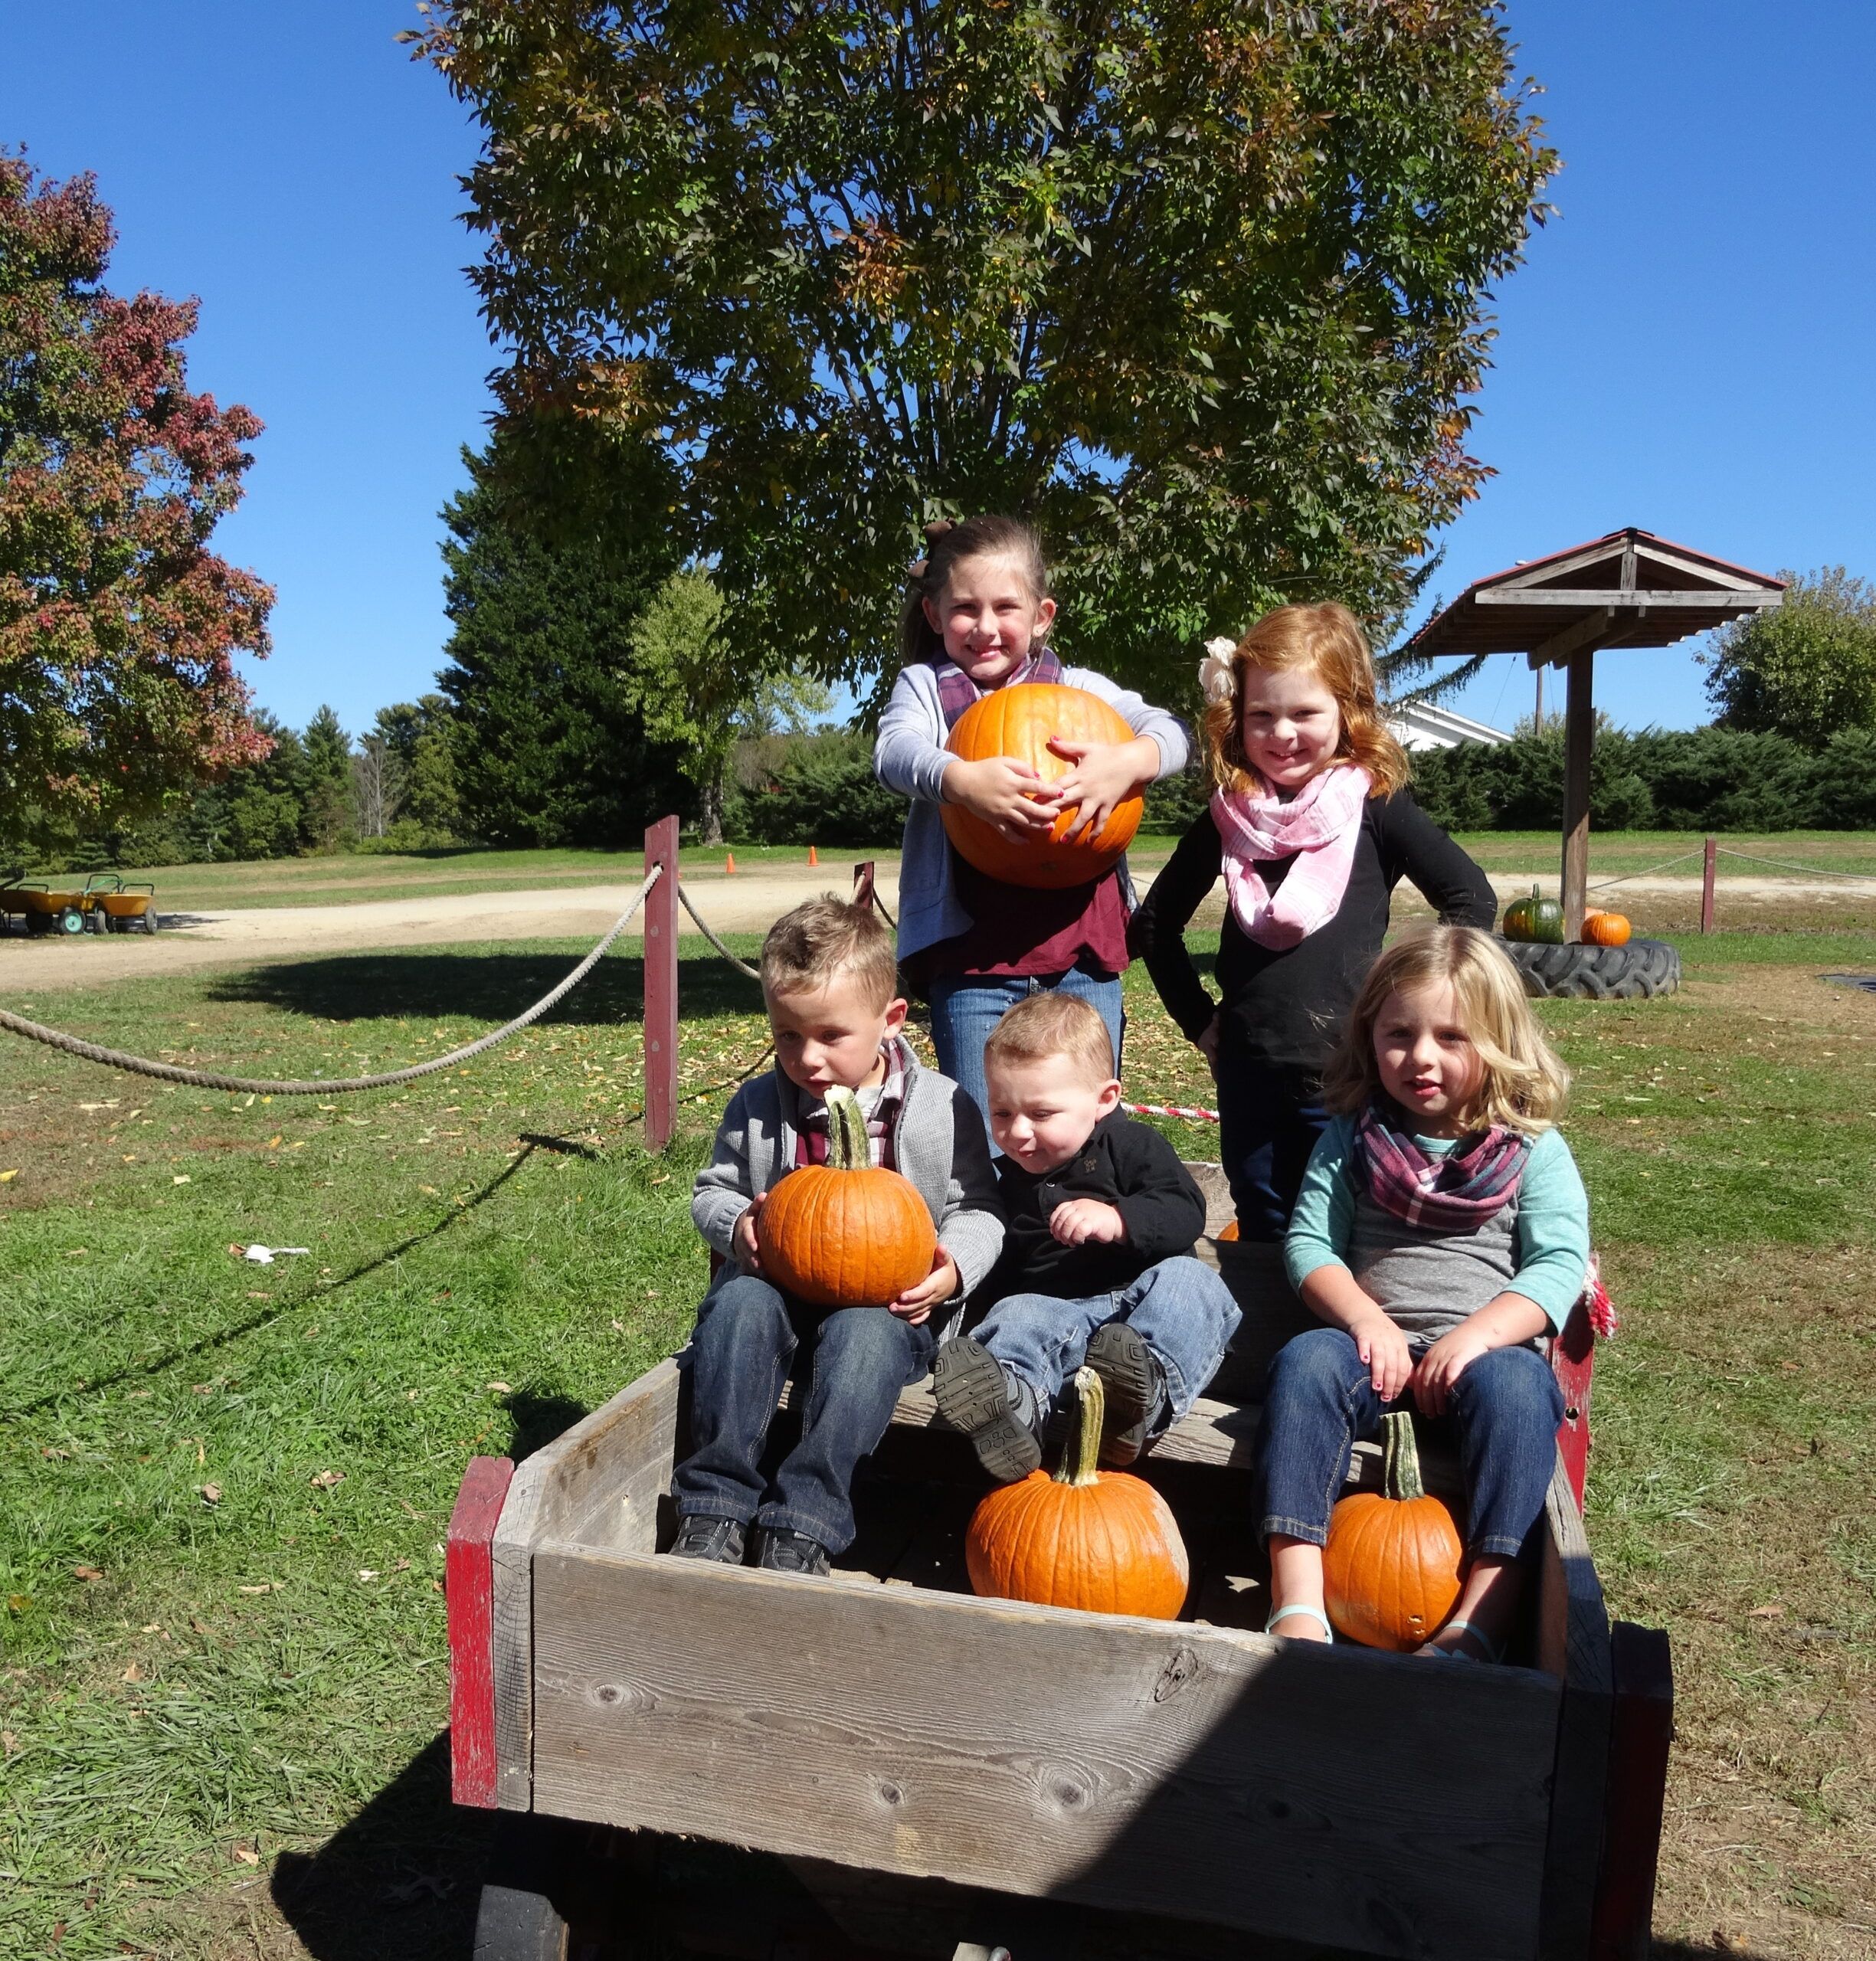 A pumpkin cart proved a perfect photo op for Michelle's five grandkids.